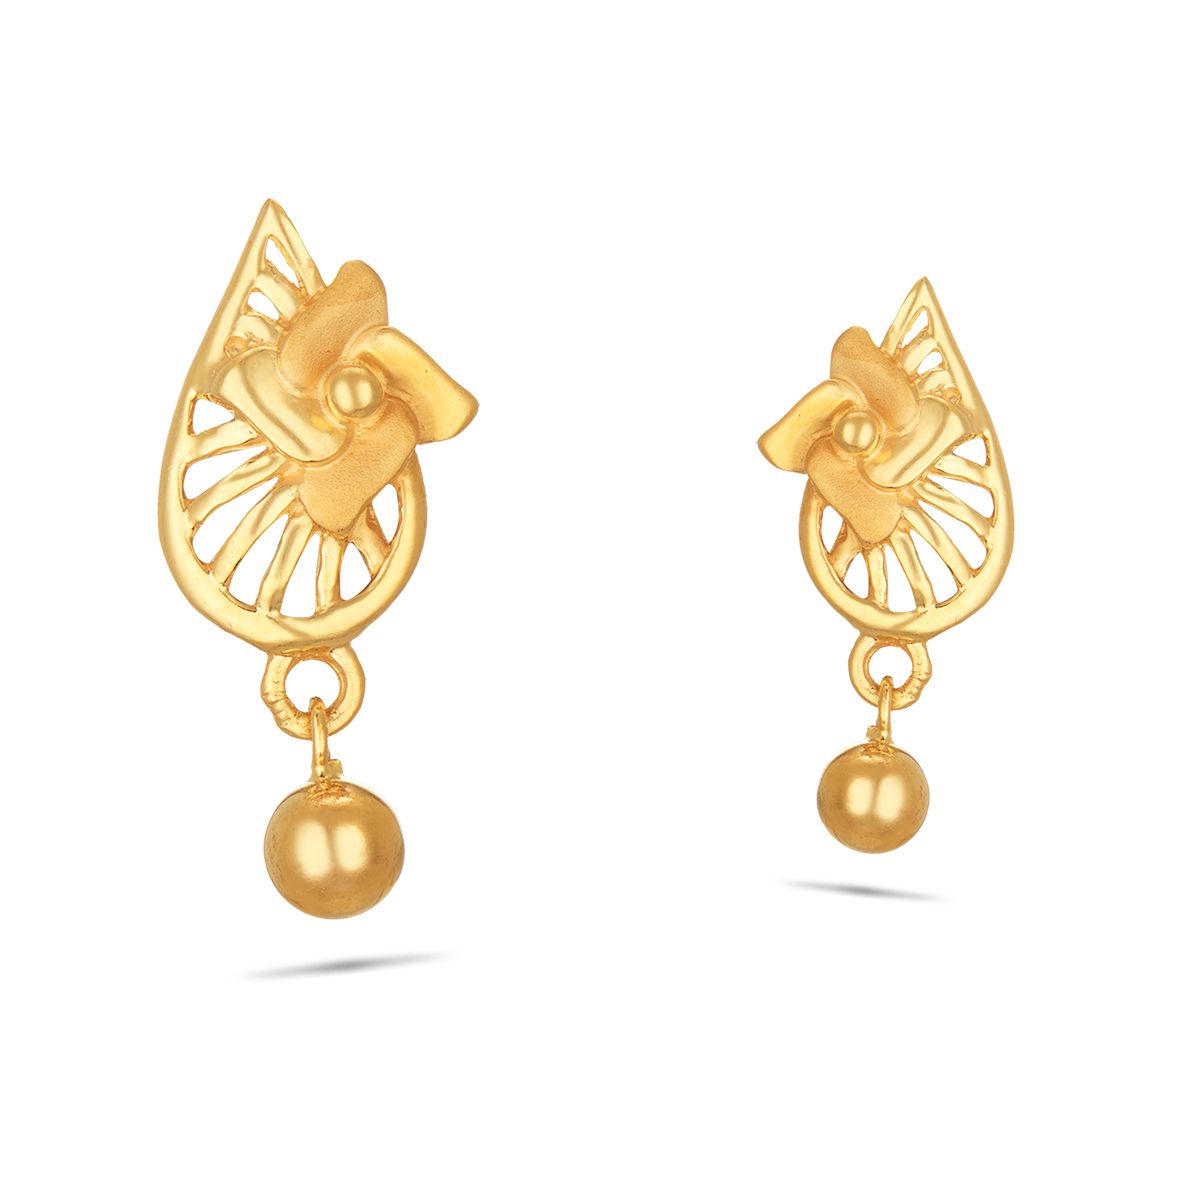 Buy Daily Wear Gold earring For Women Online ER3063